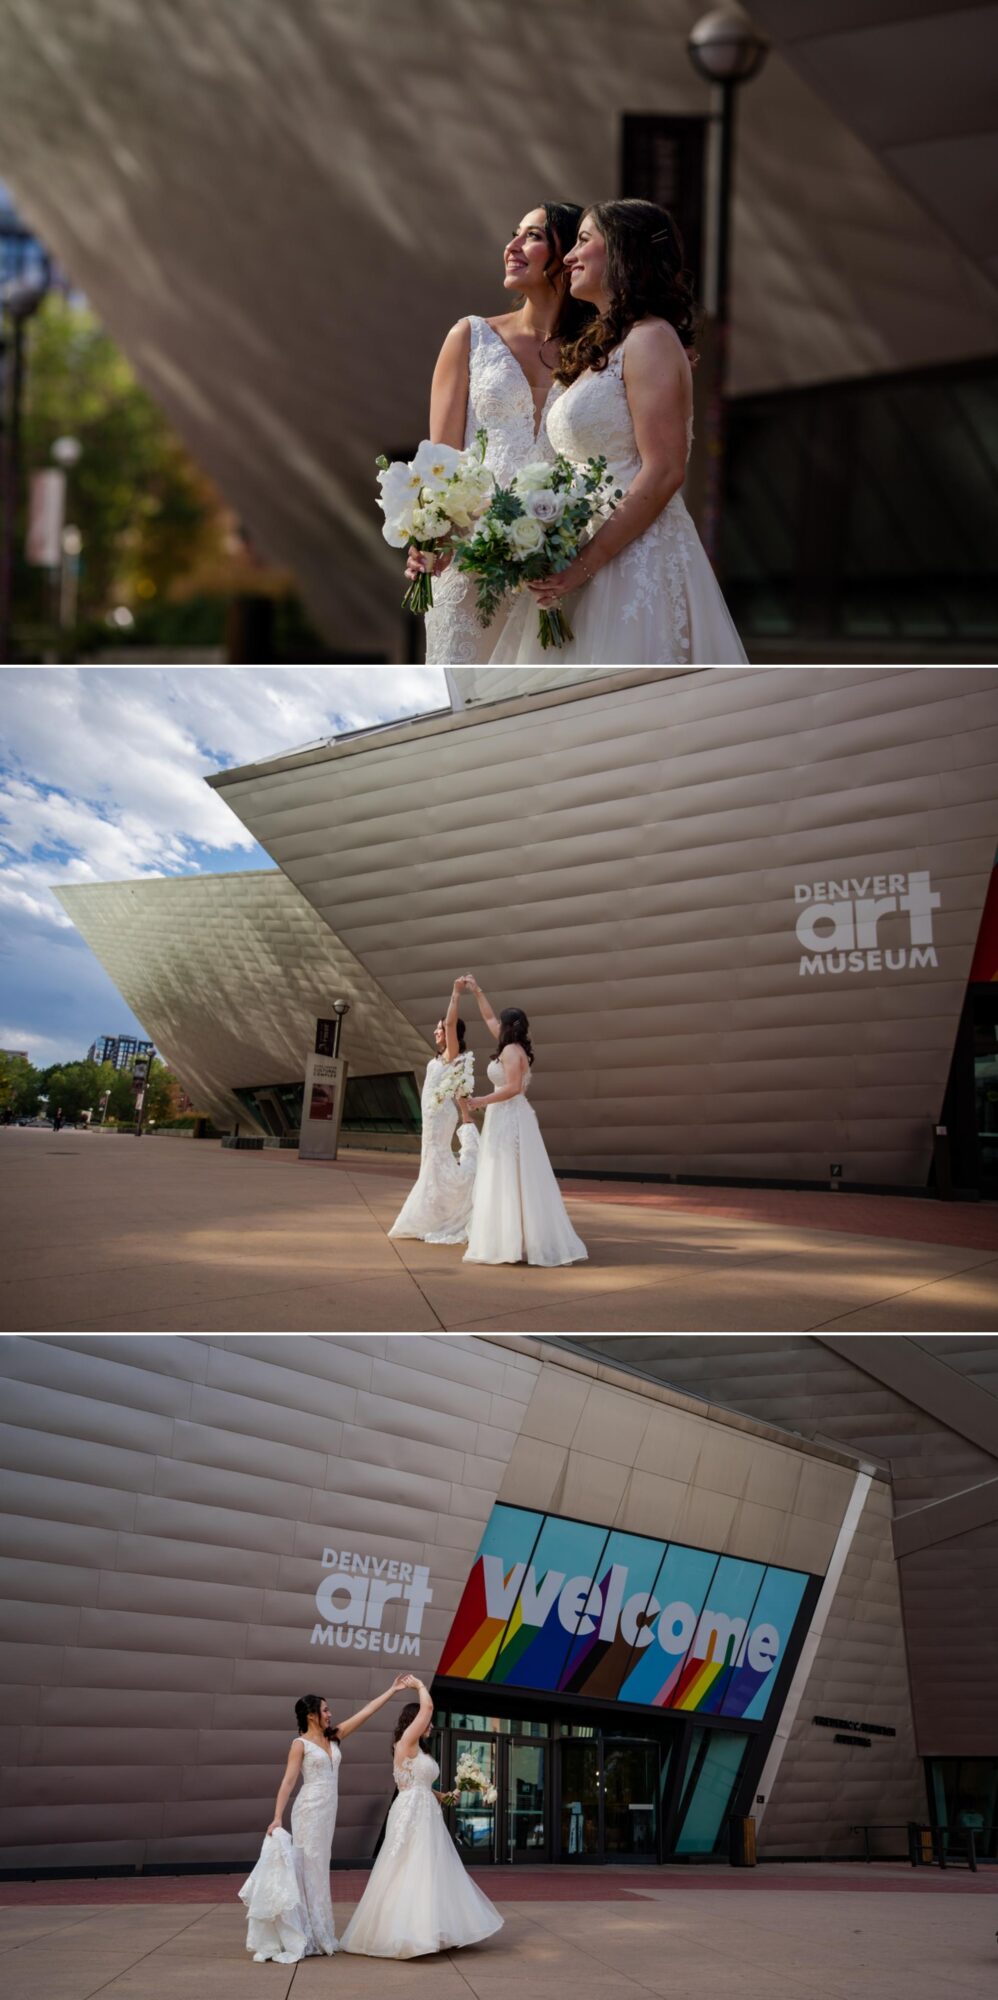 Denver Art Museum Wedding photographers